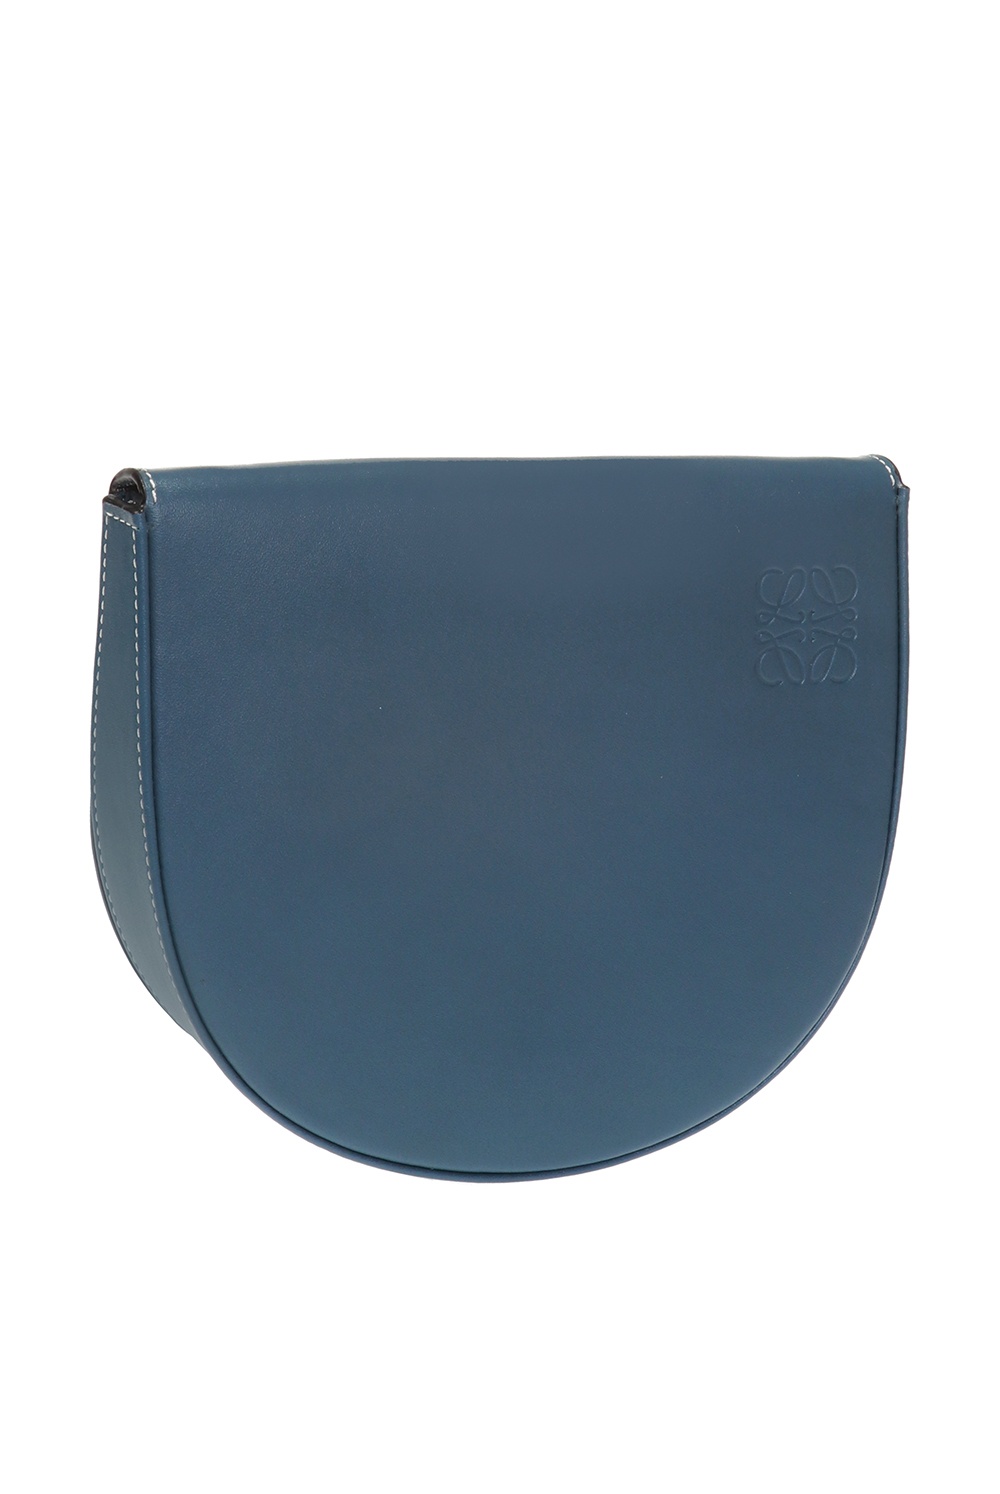 Loewe Belt Bag With Logo in Blue